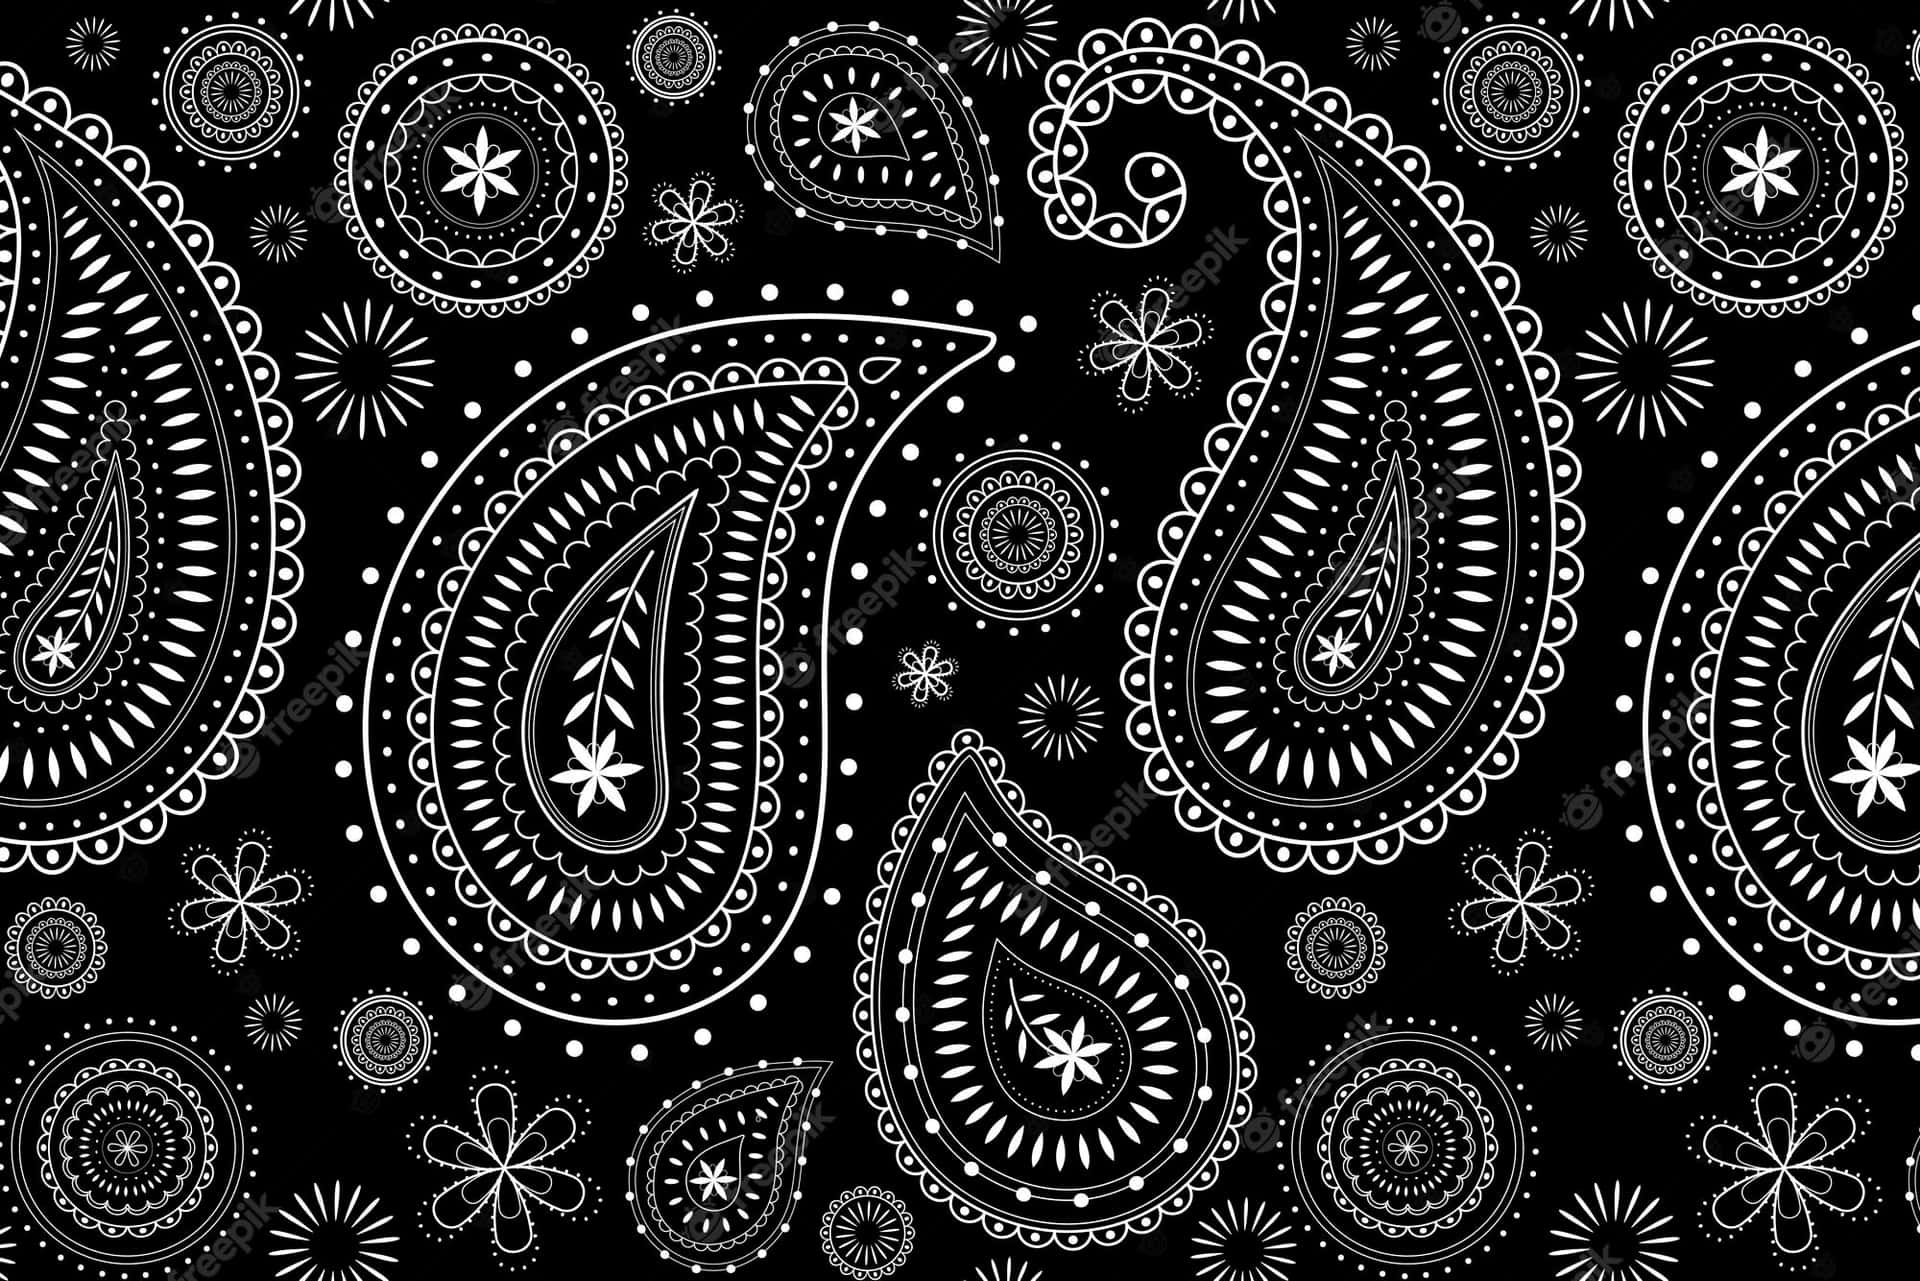 A White Paisley Pattern On A Black Background